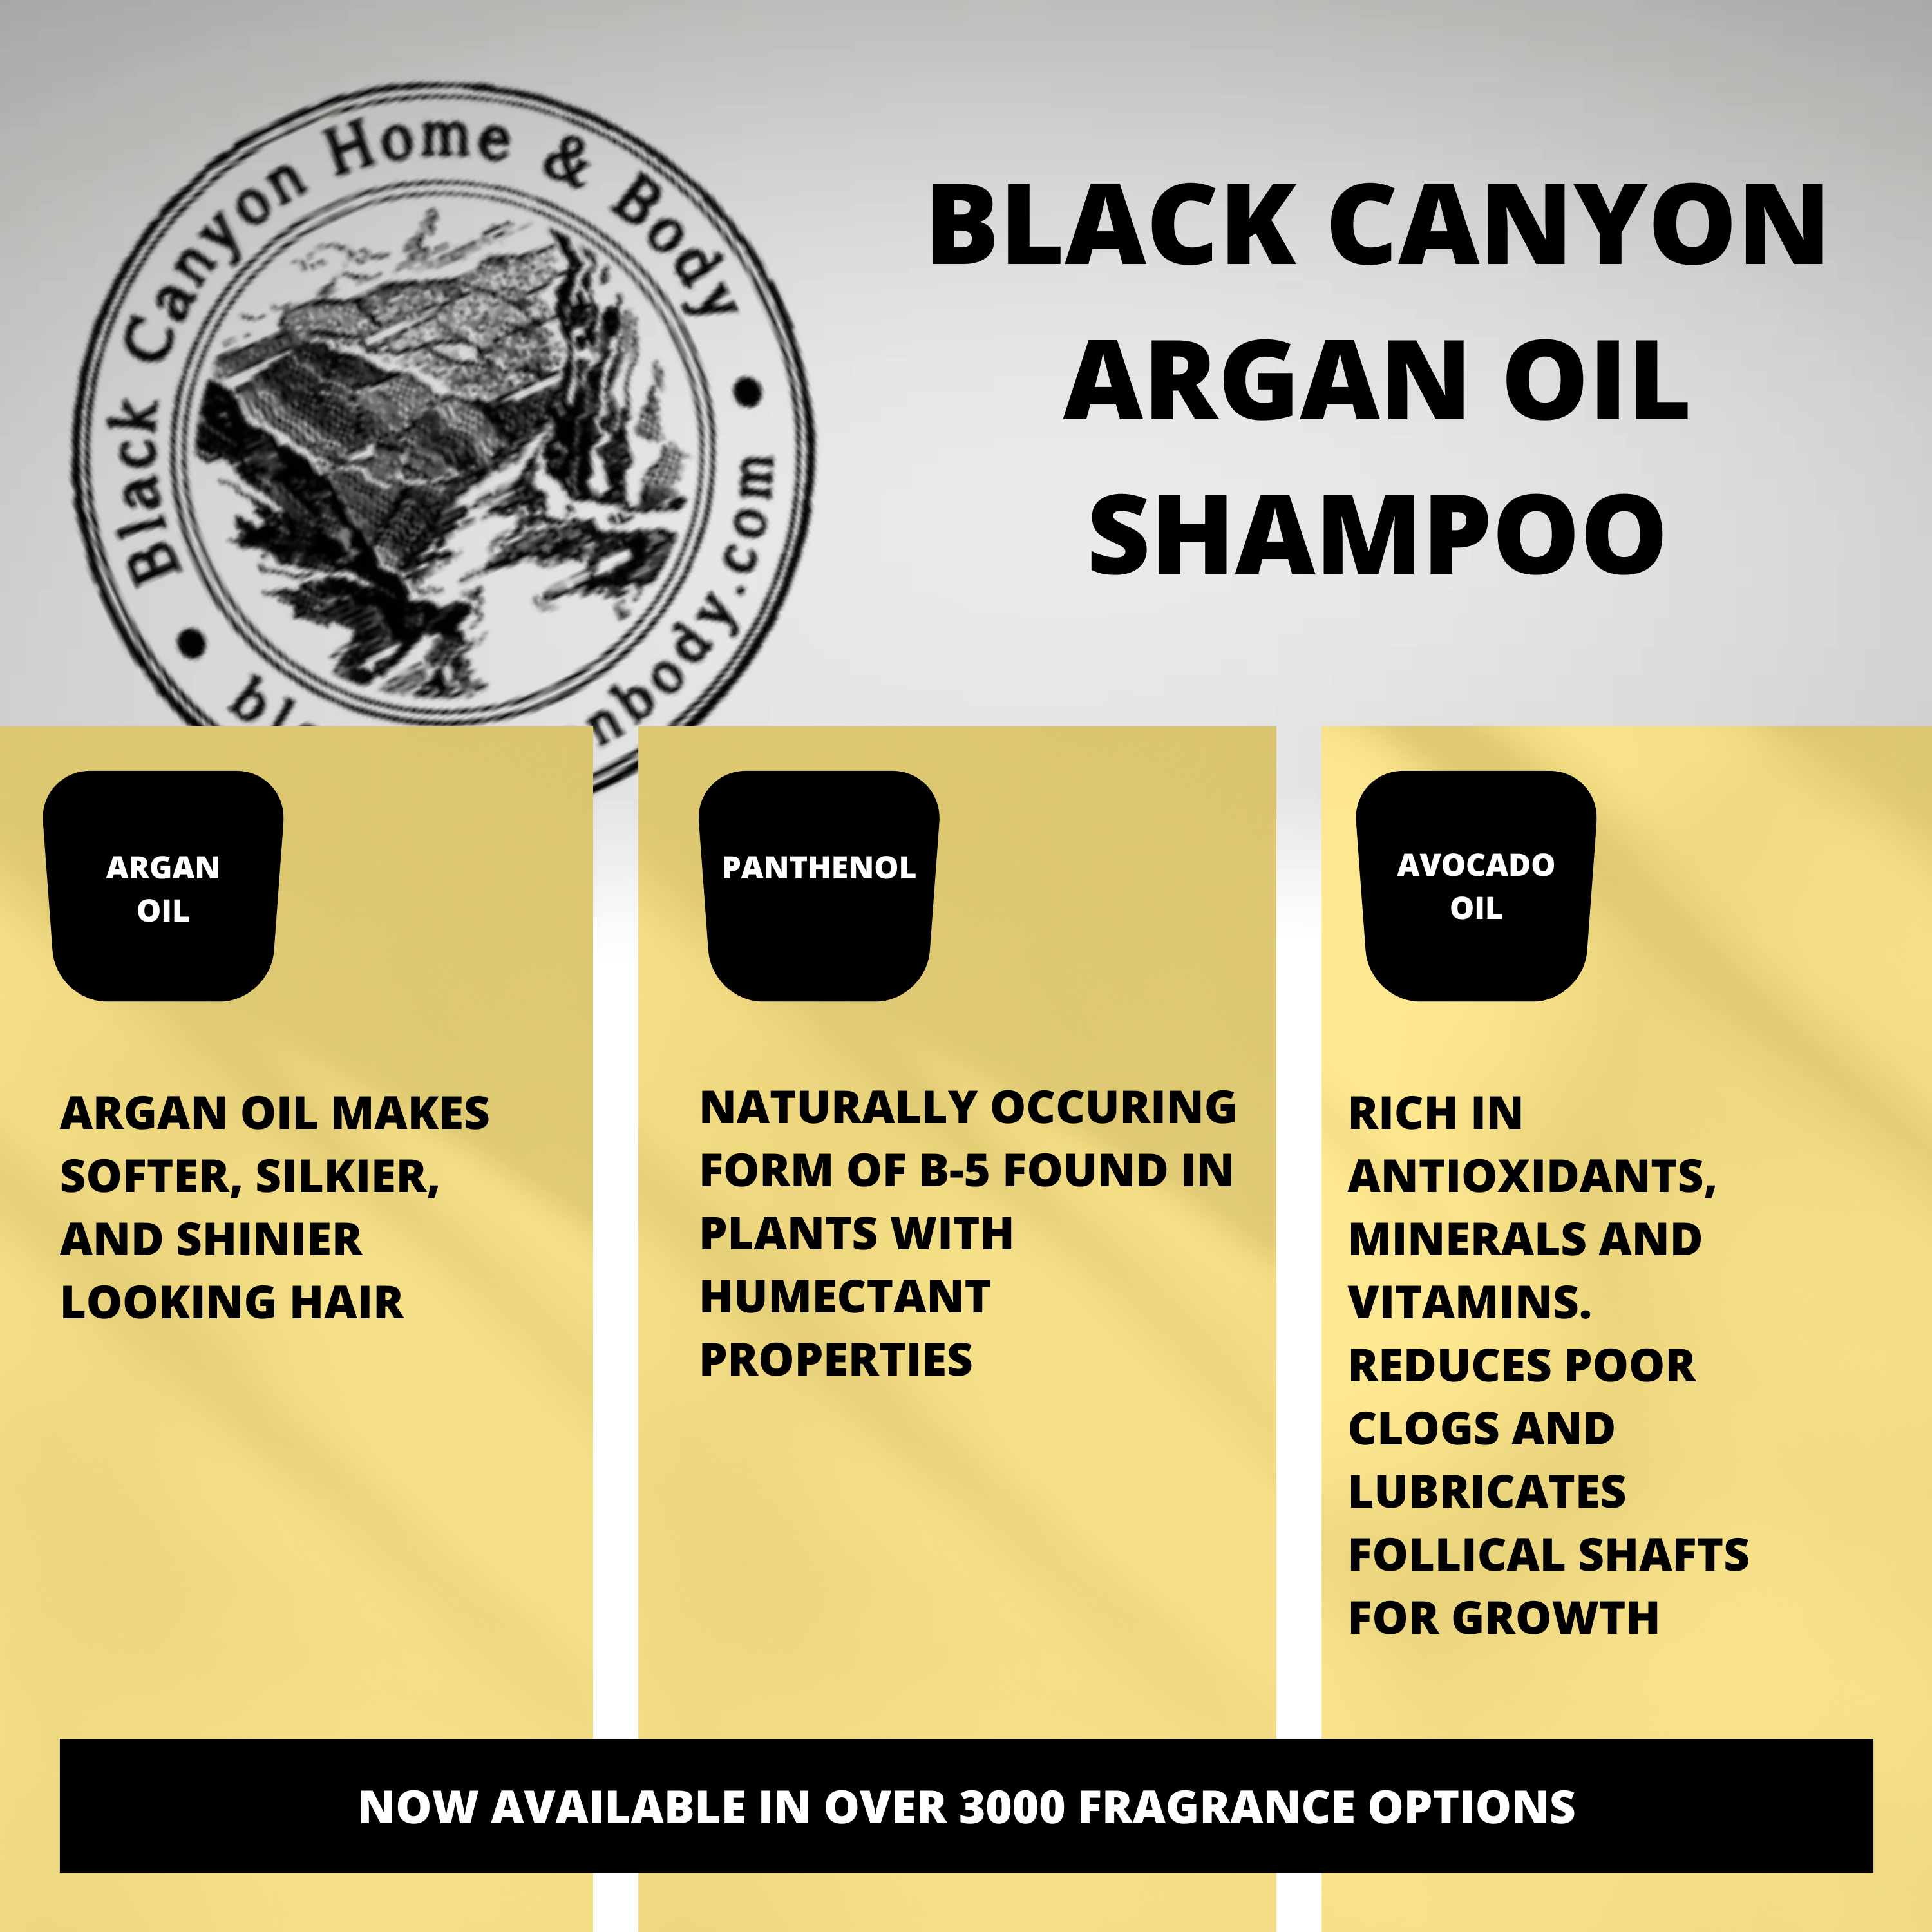 Black Canyon Bartlett Pear & Brandy Scented Shampoo with Argan Oil